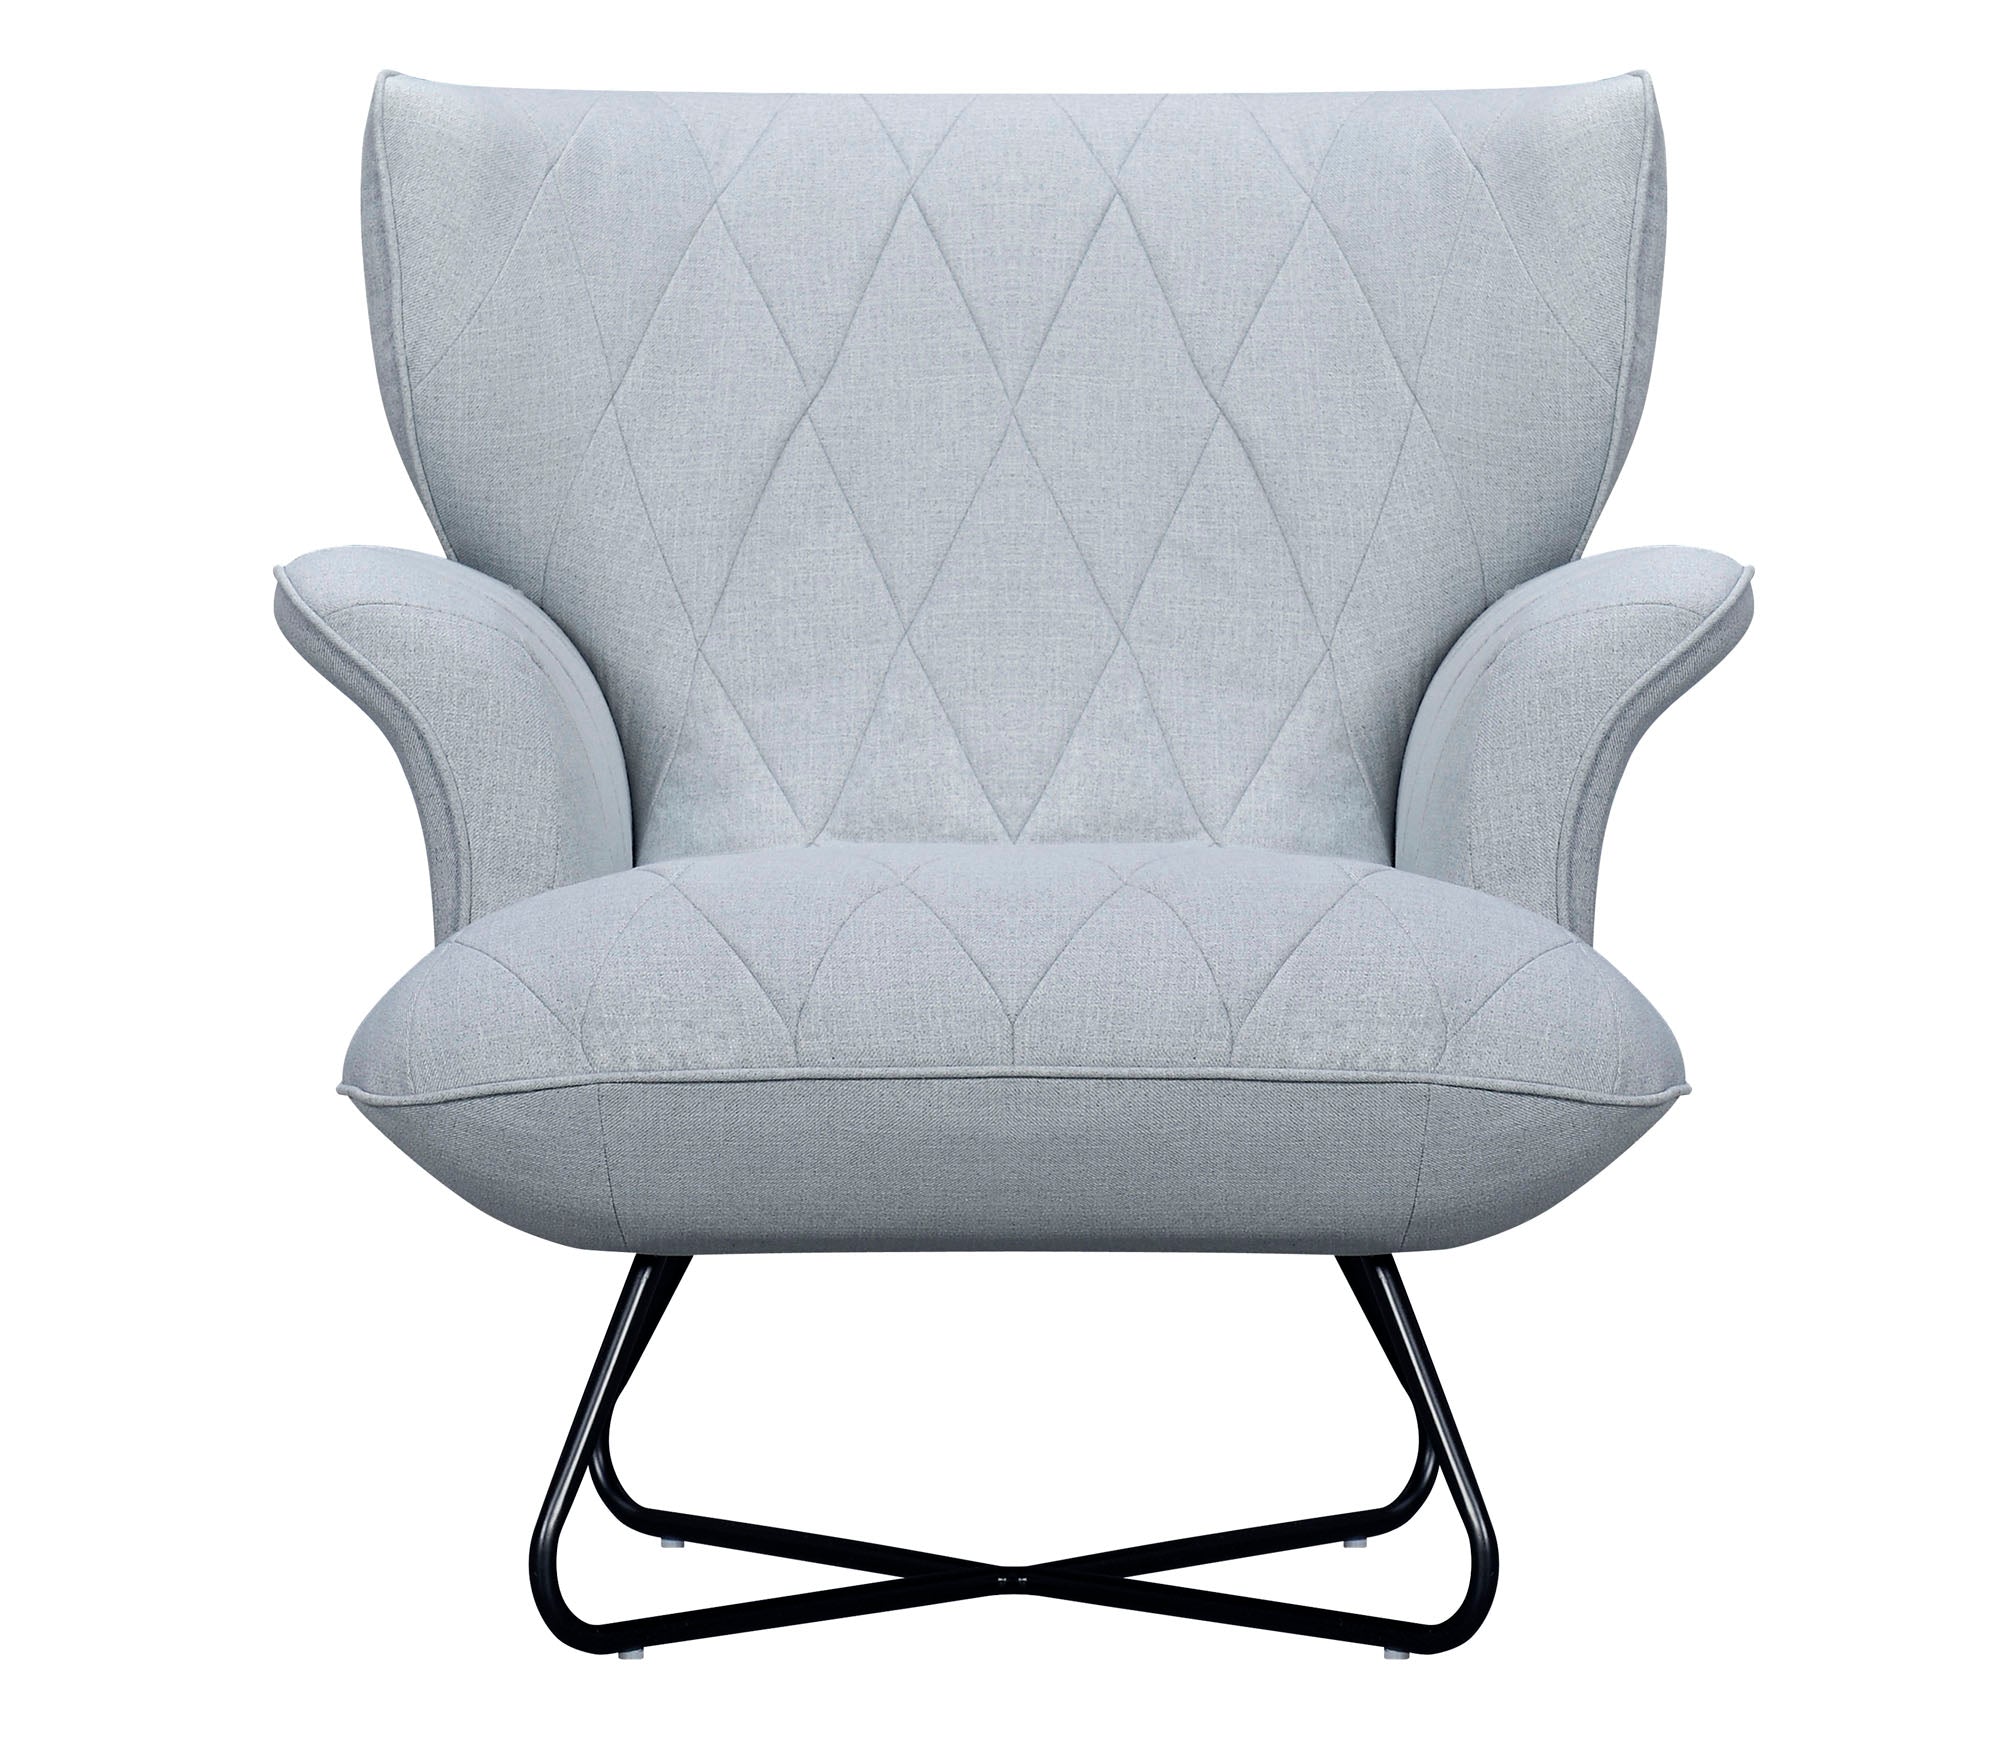 Seaglass Accent Chair - MJM Furniture